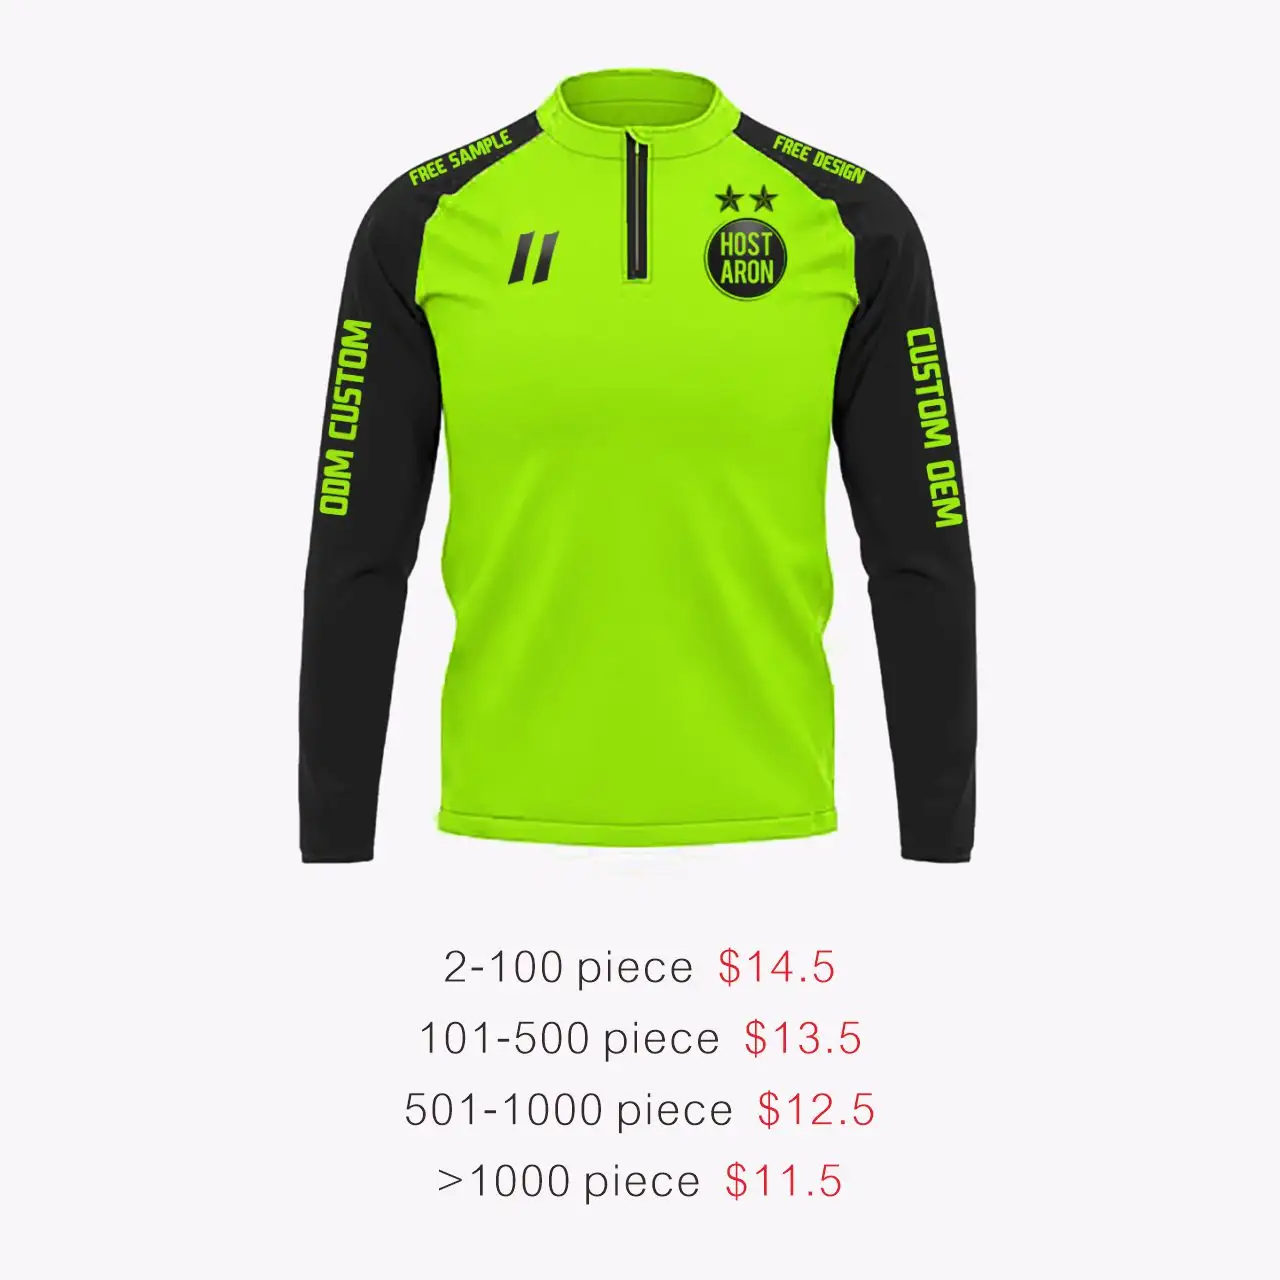 HOSTARON उच्च गुणवत्ता सॉकर टीमवियर श्रृंखला फुटबॉल वर्दी नई डिजाइन OEM कस्टम पुरुष फुटबॉल जर्सी शर्ट प्रिंट स्पोर्ट्सवियर